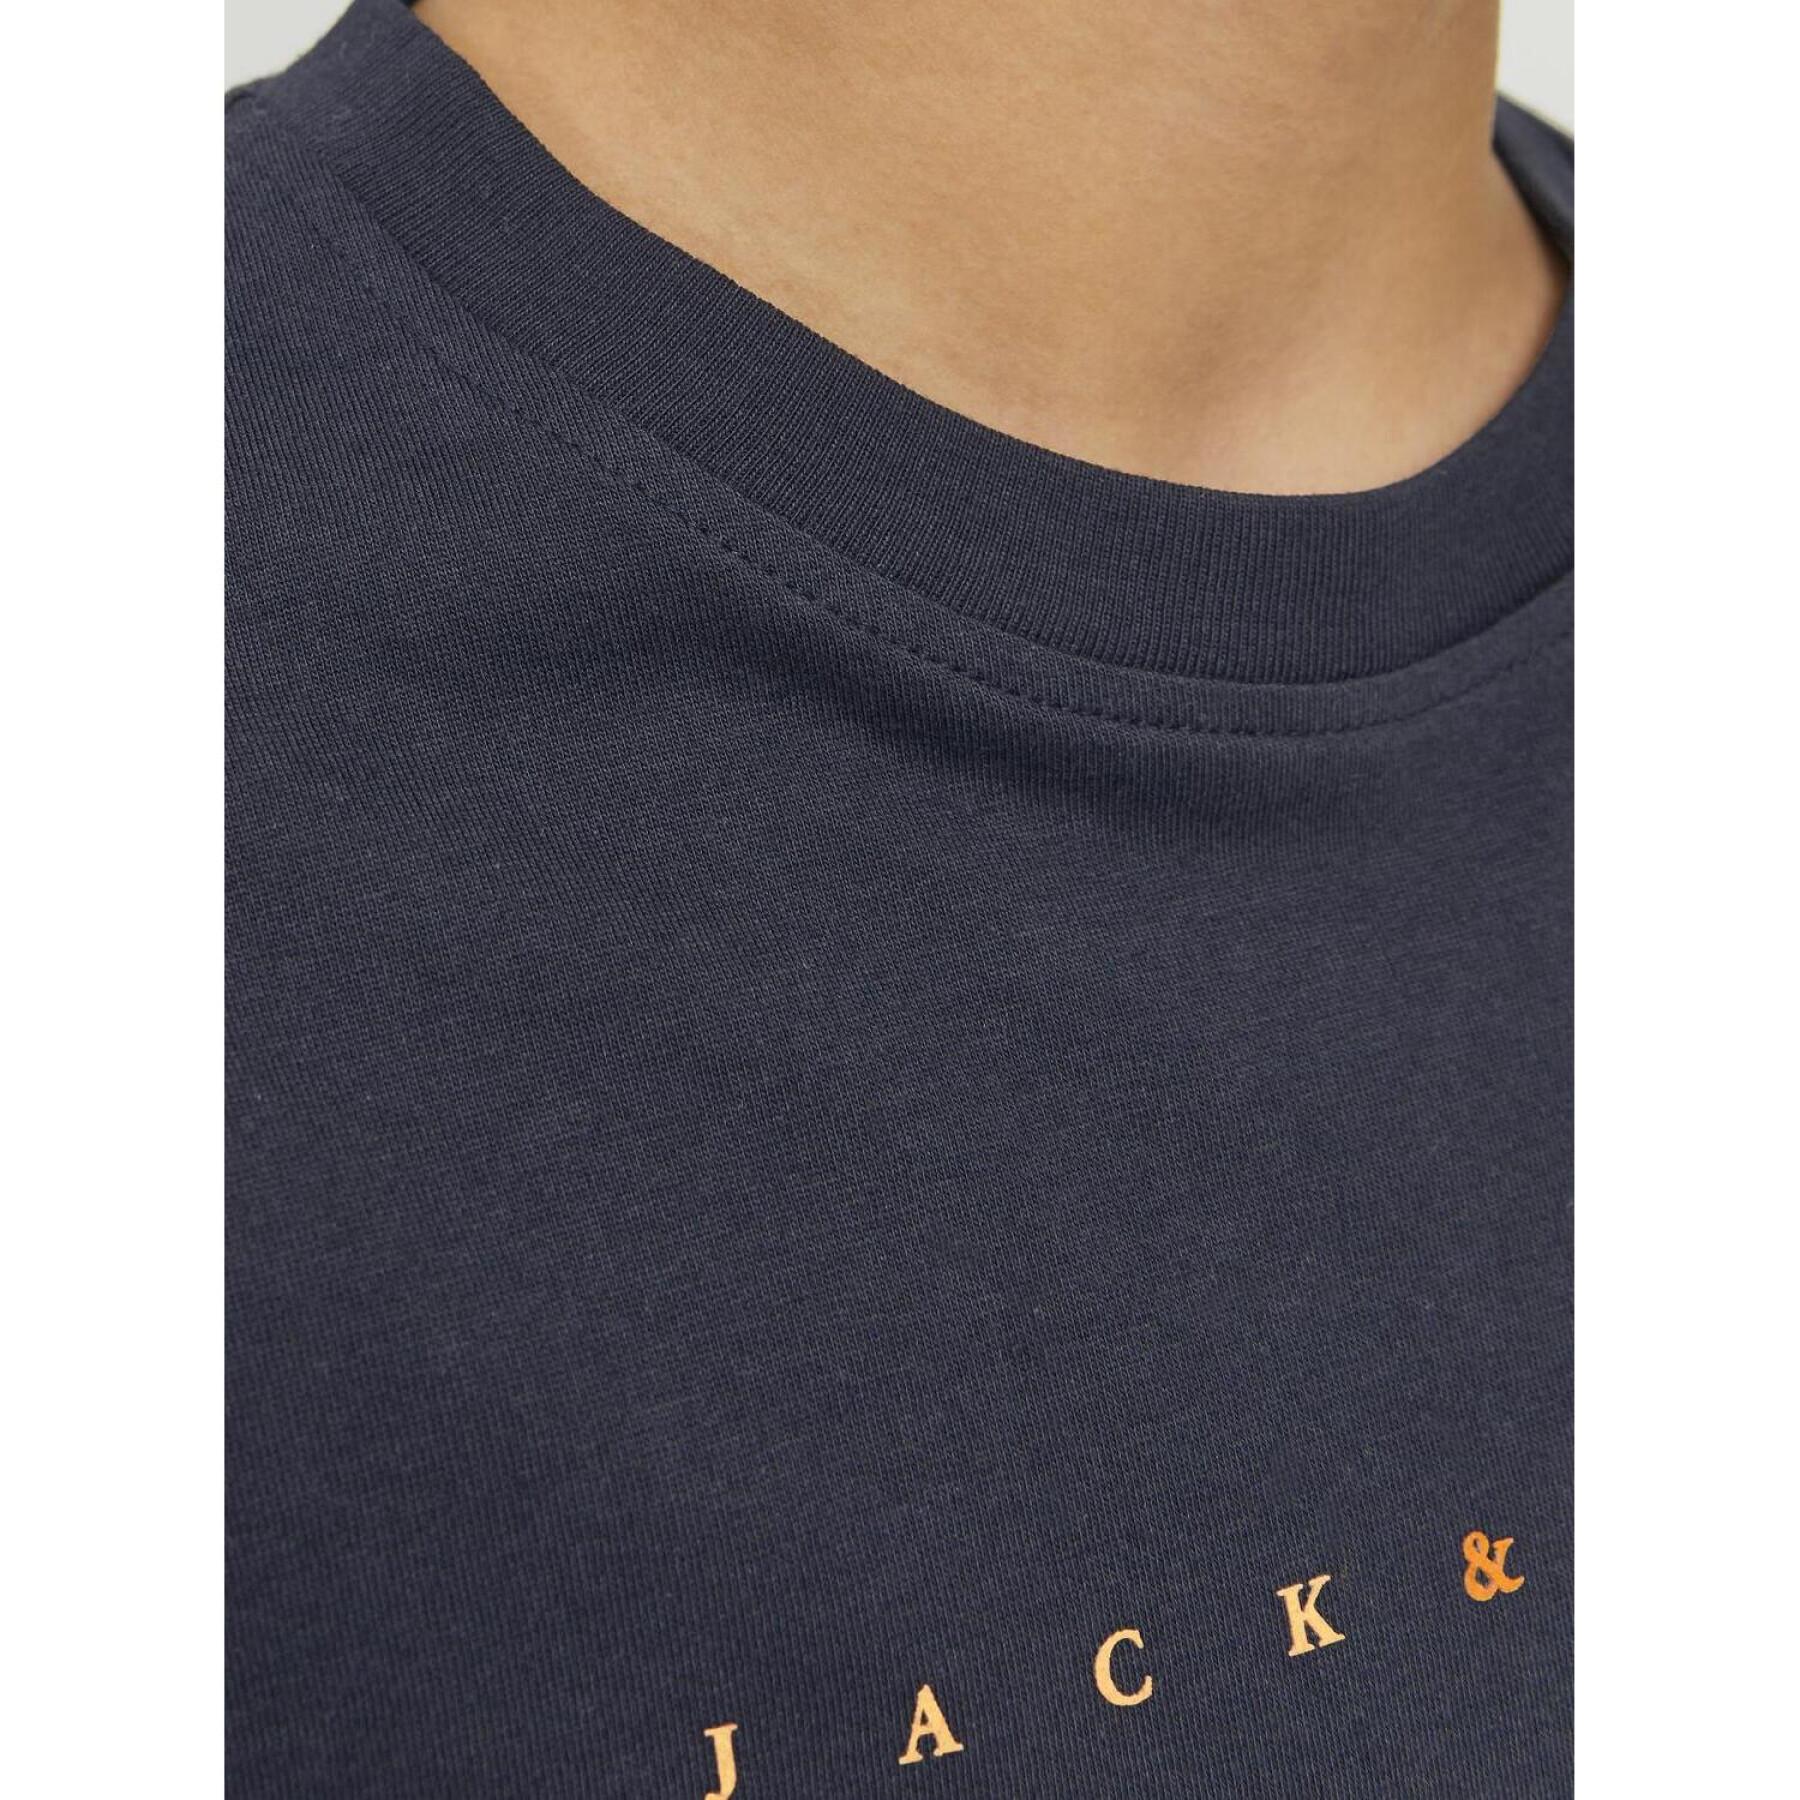 Camiseta infantil Jack & Jones Star